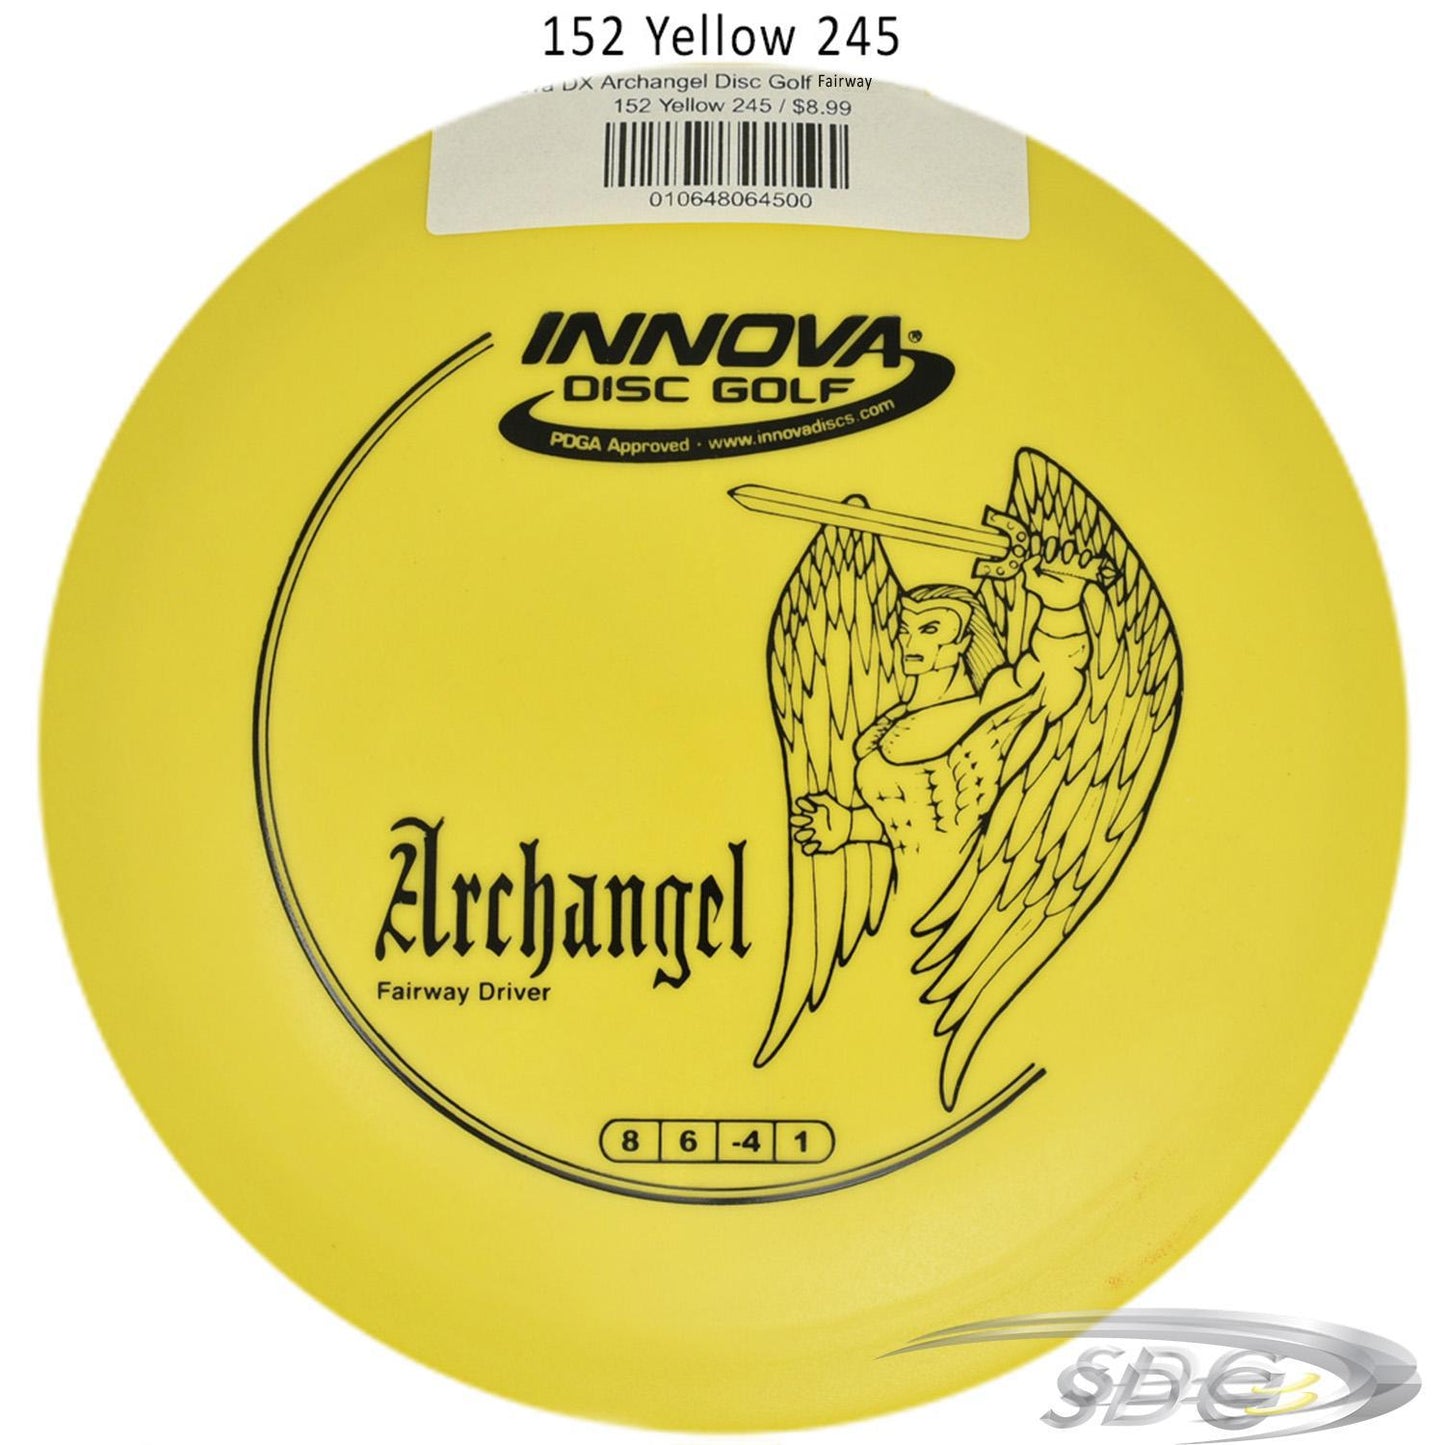 innova-dx-archangel-disc-golf-fairway-driver 152 Yellow 245 